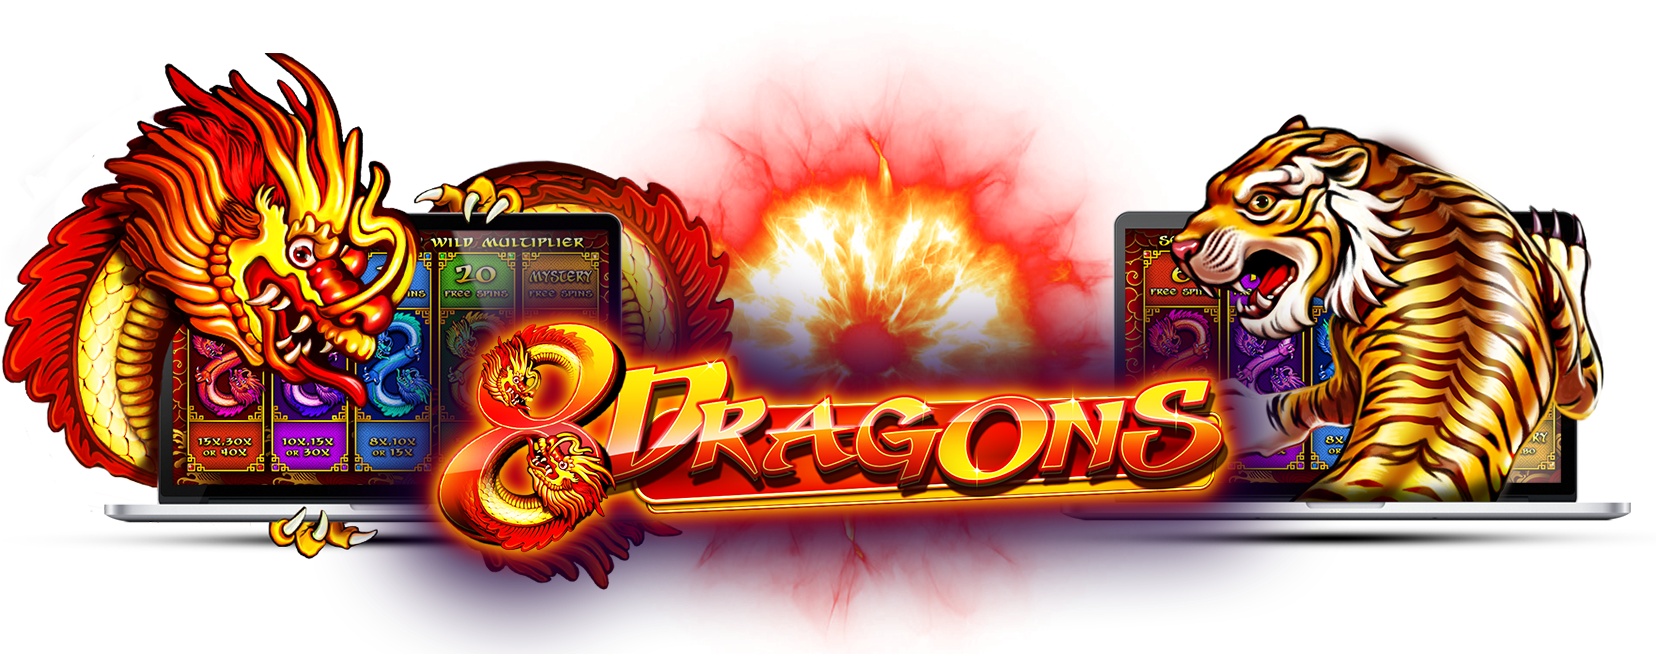 8 Dragons Slot Game Artwork PNG